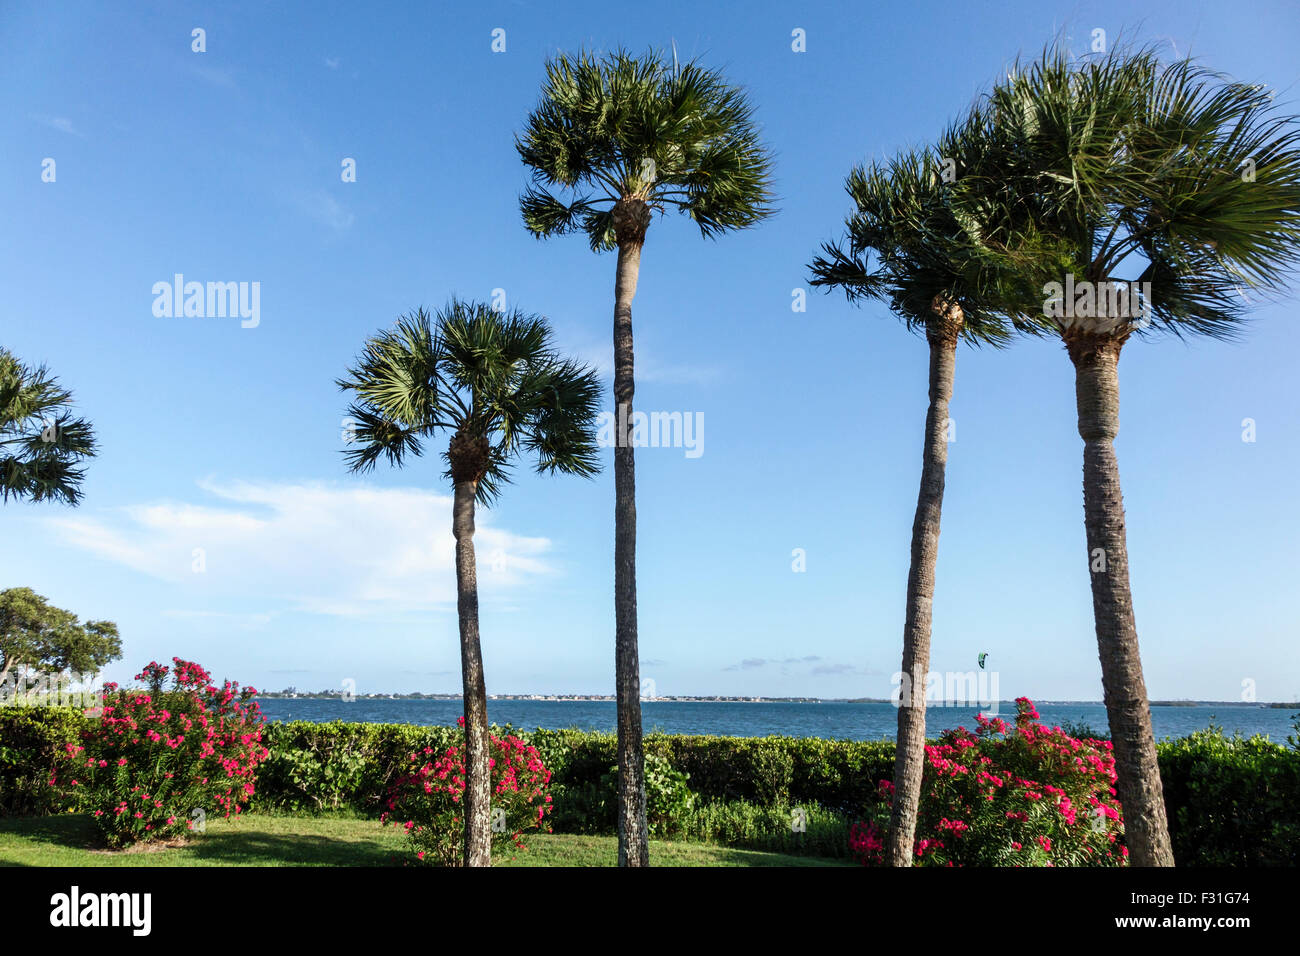 Stuart Florida,Hutchinson Barrier Island Marriott Beach Resort & Marina,hotel,Indian River Lagoon,sabal palm trees,nature,natural,scenery,FL150415045 Stock Photo